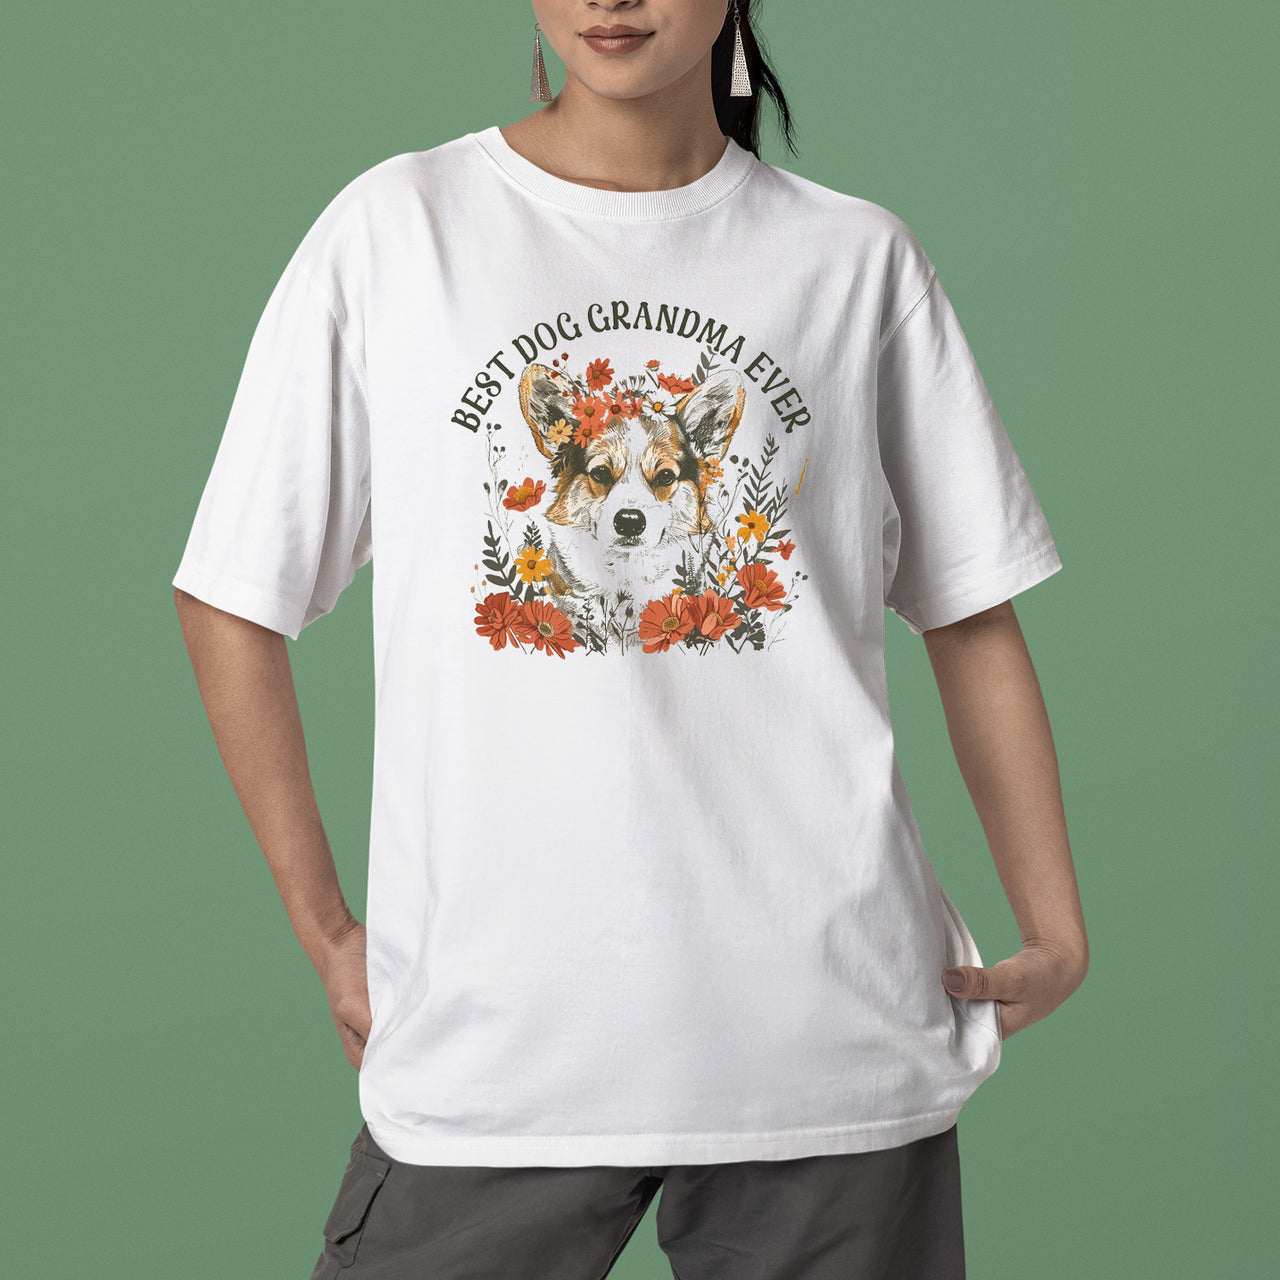 Corgi Dog T-shirt, Pet Lover Shirt, Dog Lover Shirt, Best Dog Grandma Ever T-Shirt, Dog Owner Shirt, Gift For Dog Grandma, Funny Dog Shirts, Women Dog T-Shirt, Mother's Day Gift, Dog Lover Wife Gifts, Dog Shirt